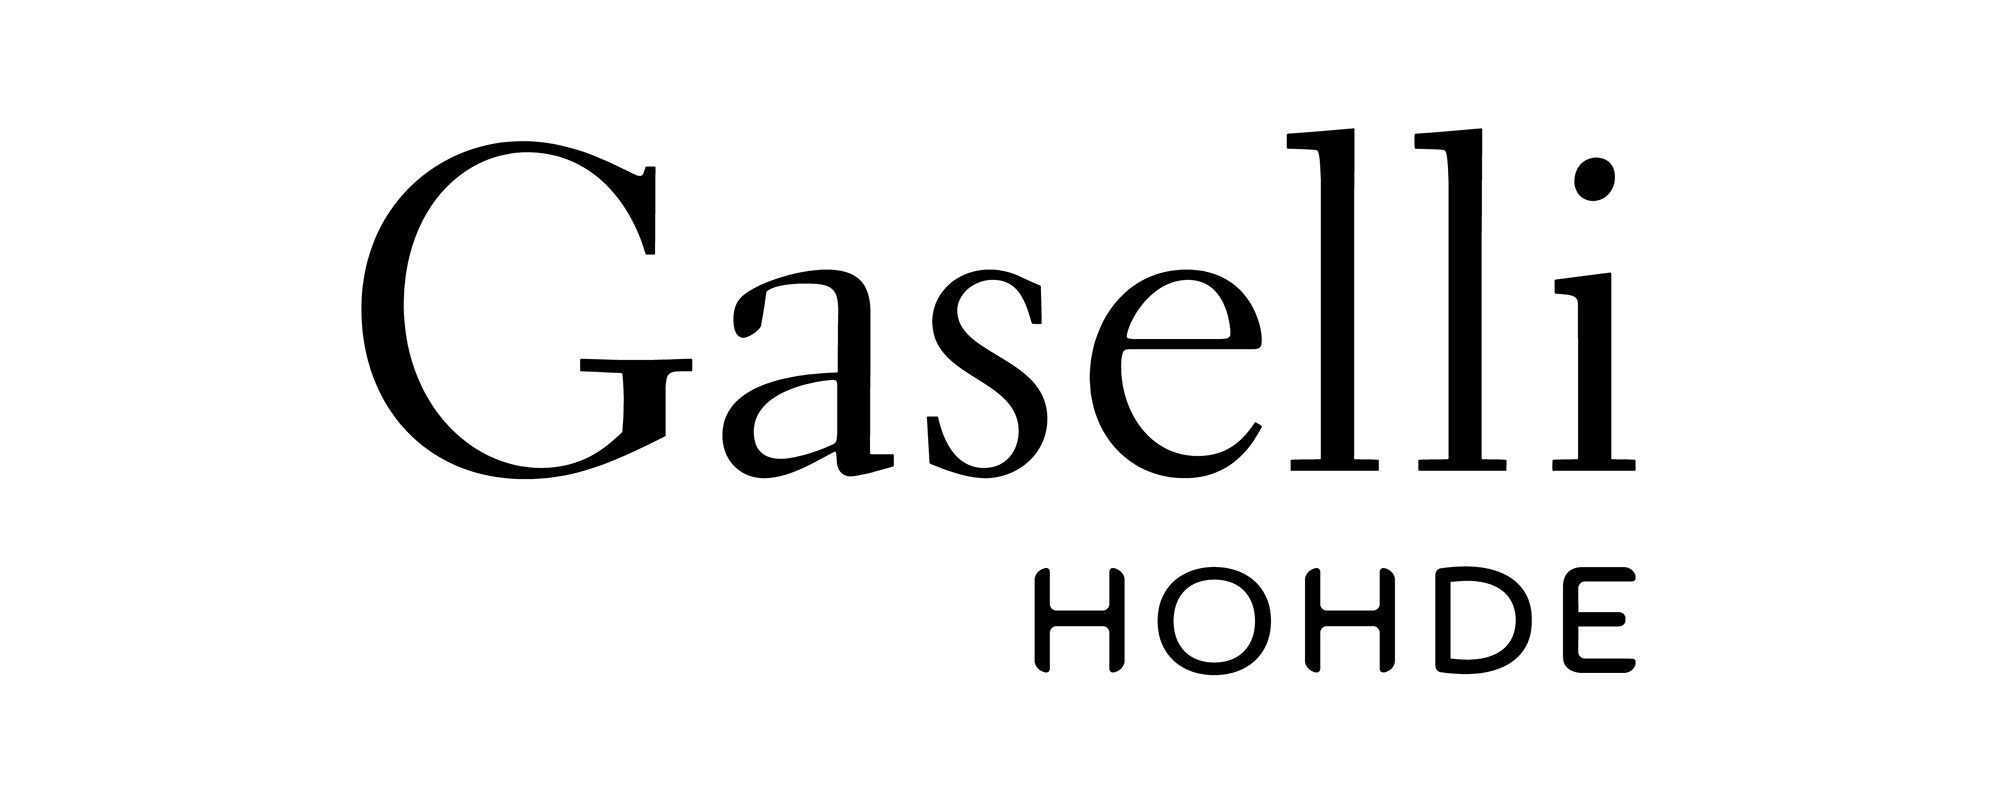 Gaselli hohde logo